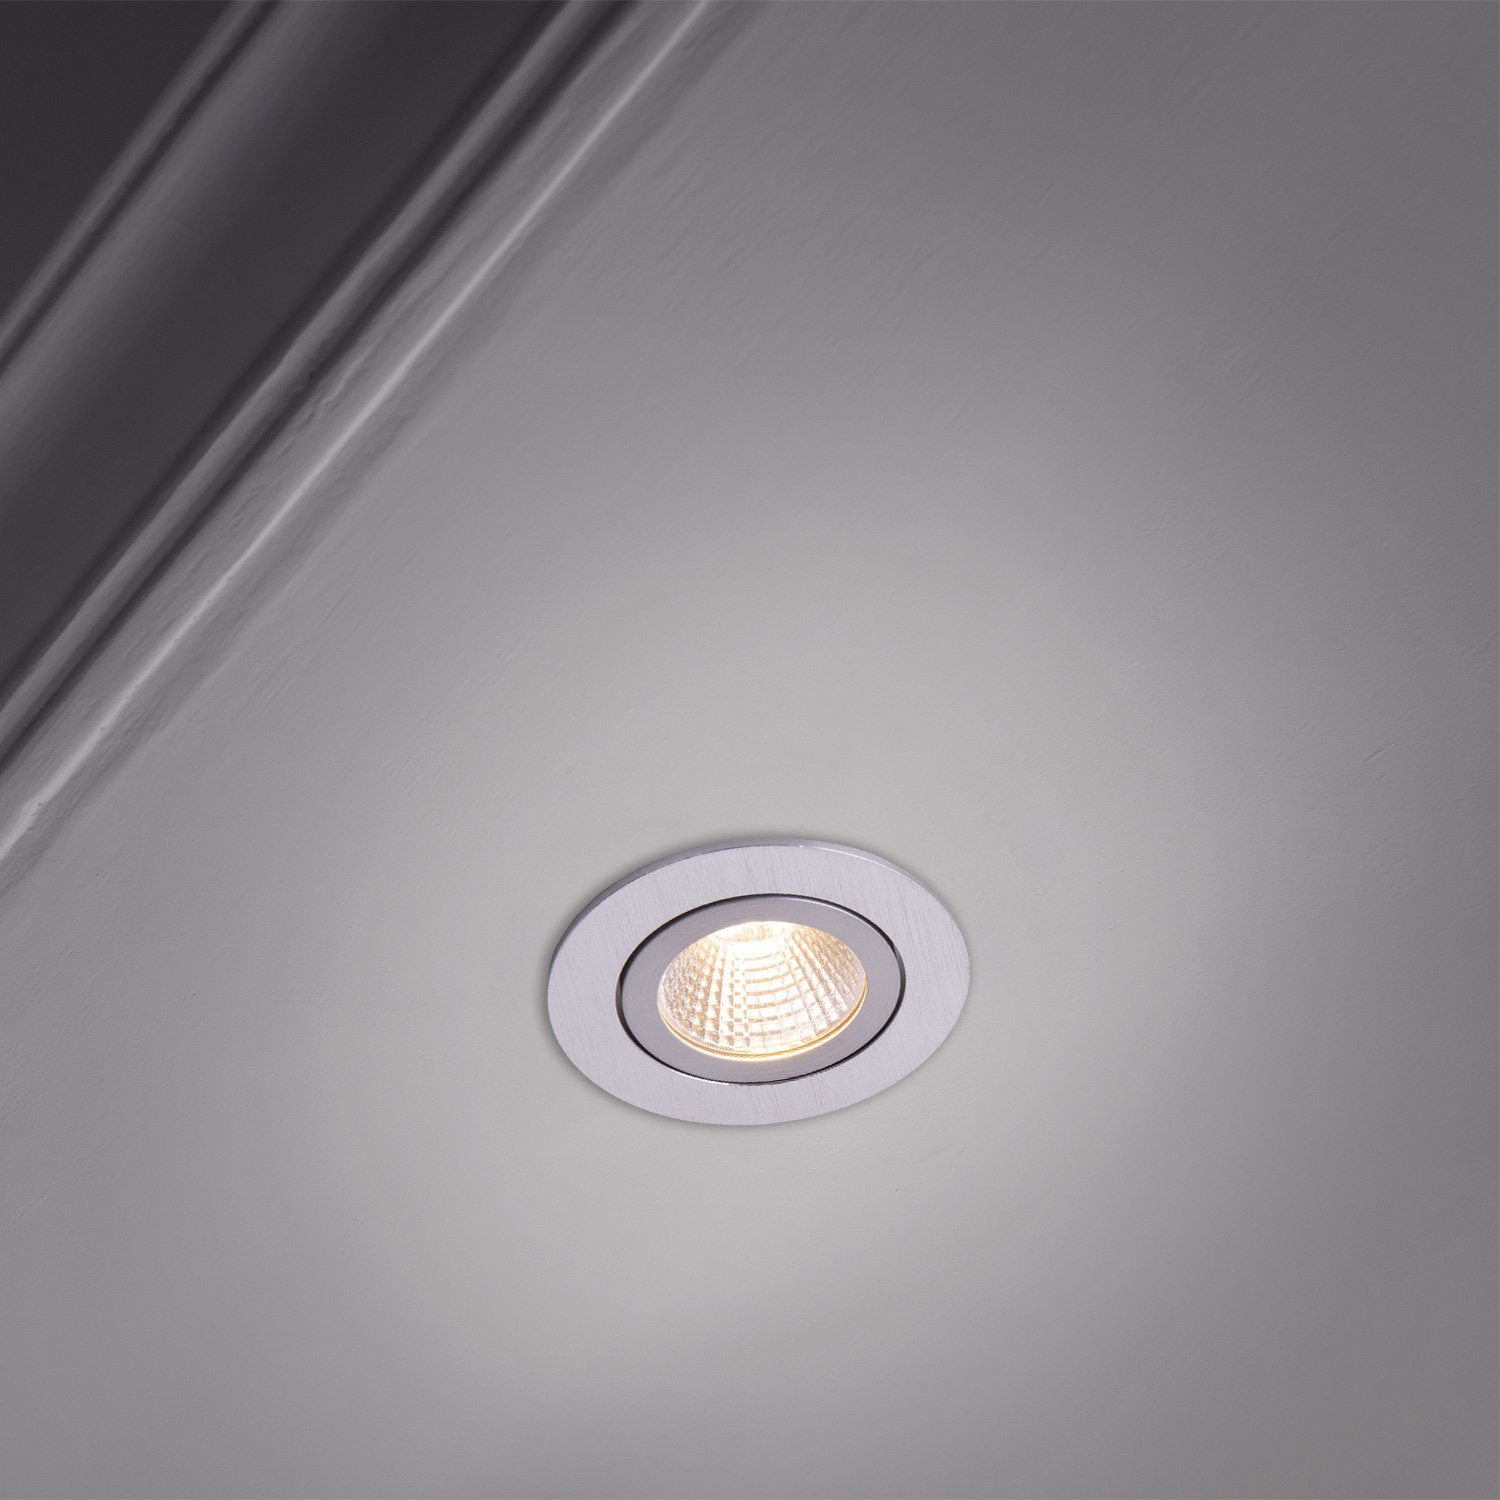 Paco Home Einbaustrahler Strahler Spotlight Schwenkbar Einbauleuchte Flach Warmweiß, LED wechselbar, LED Rita, LED dimmbar